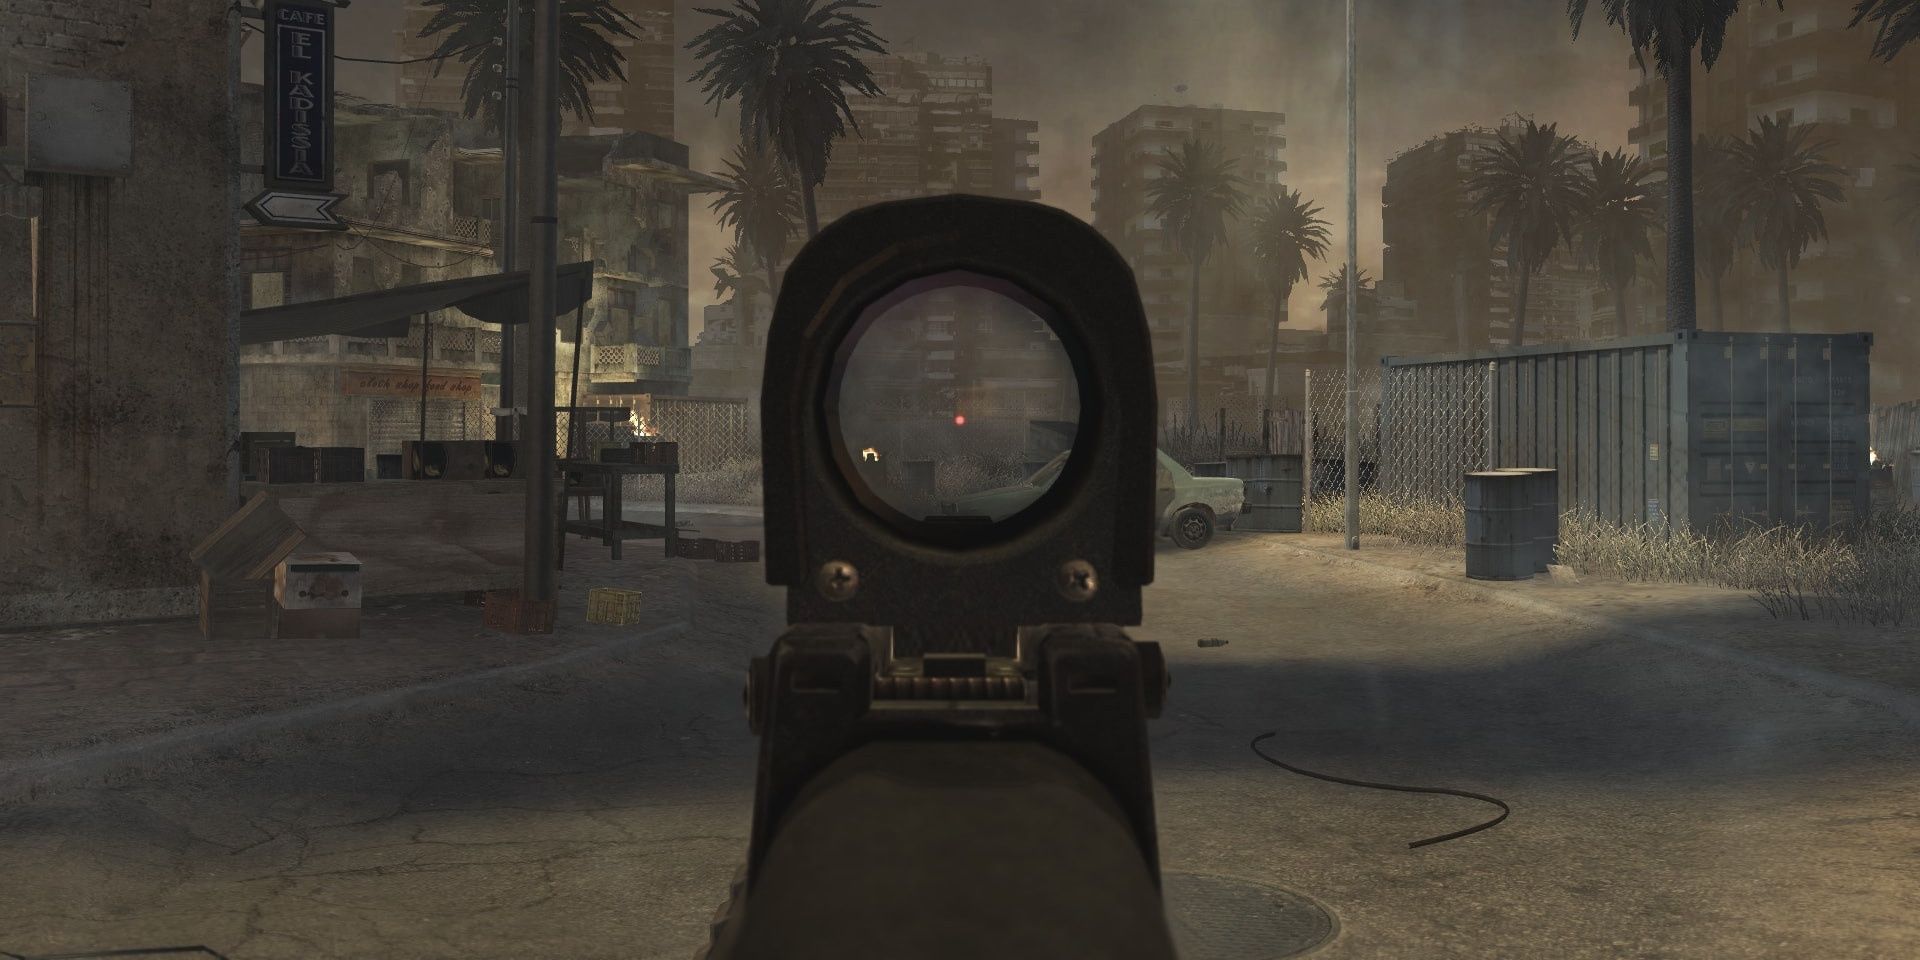 Call of Duty Modern Warfare 2 F2000 Red Dot Sight attachment. From GameBanana.